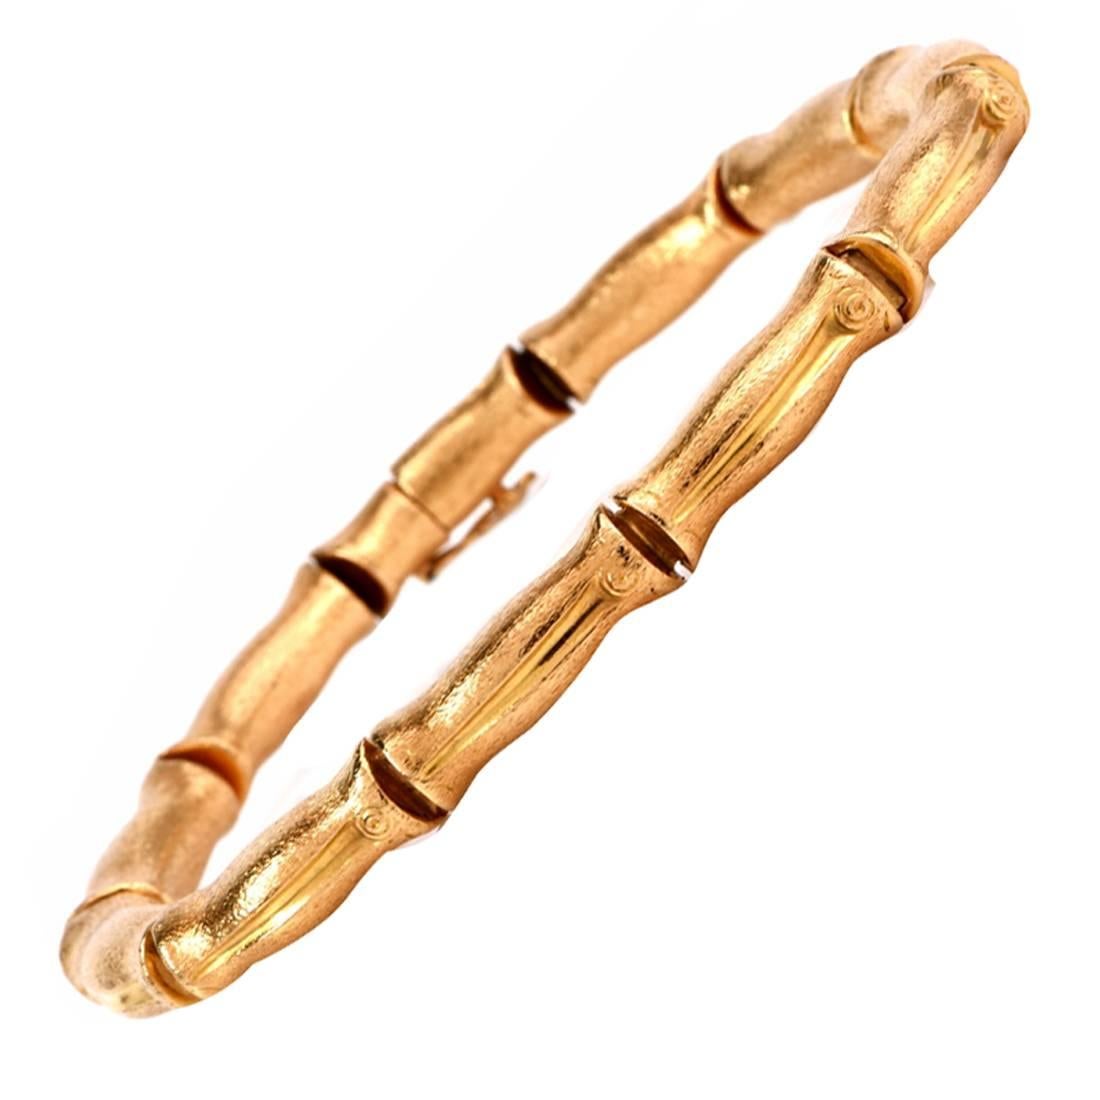 Gold Bamboo Motif Bracelet